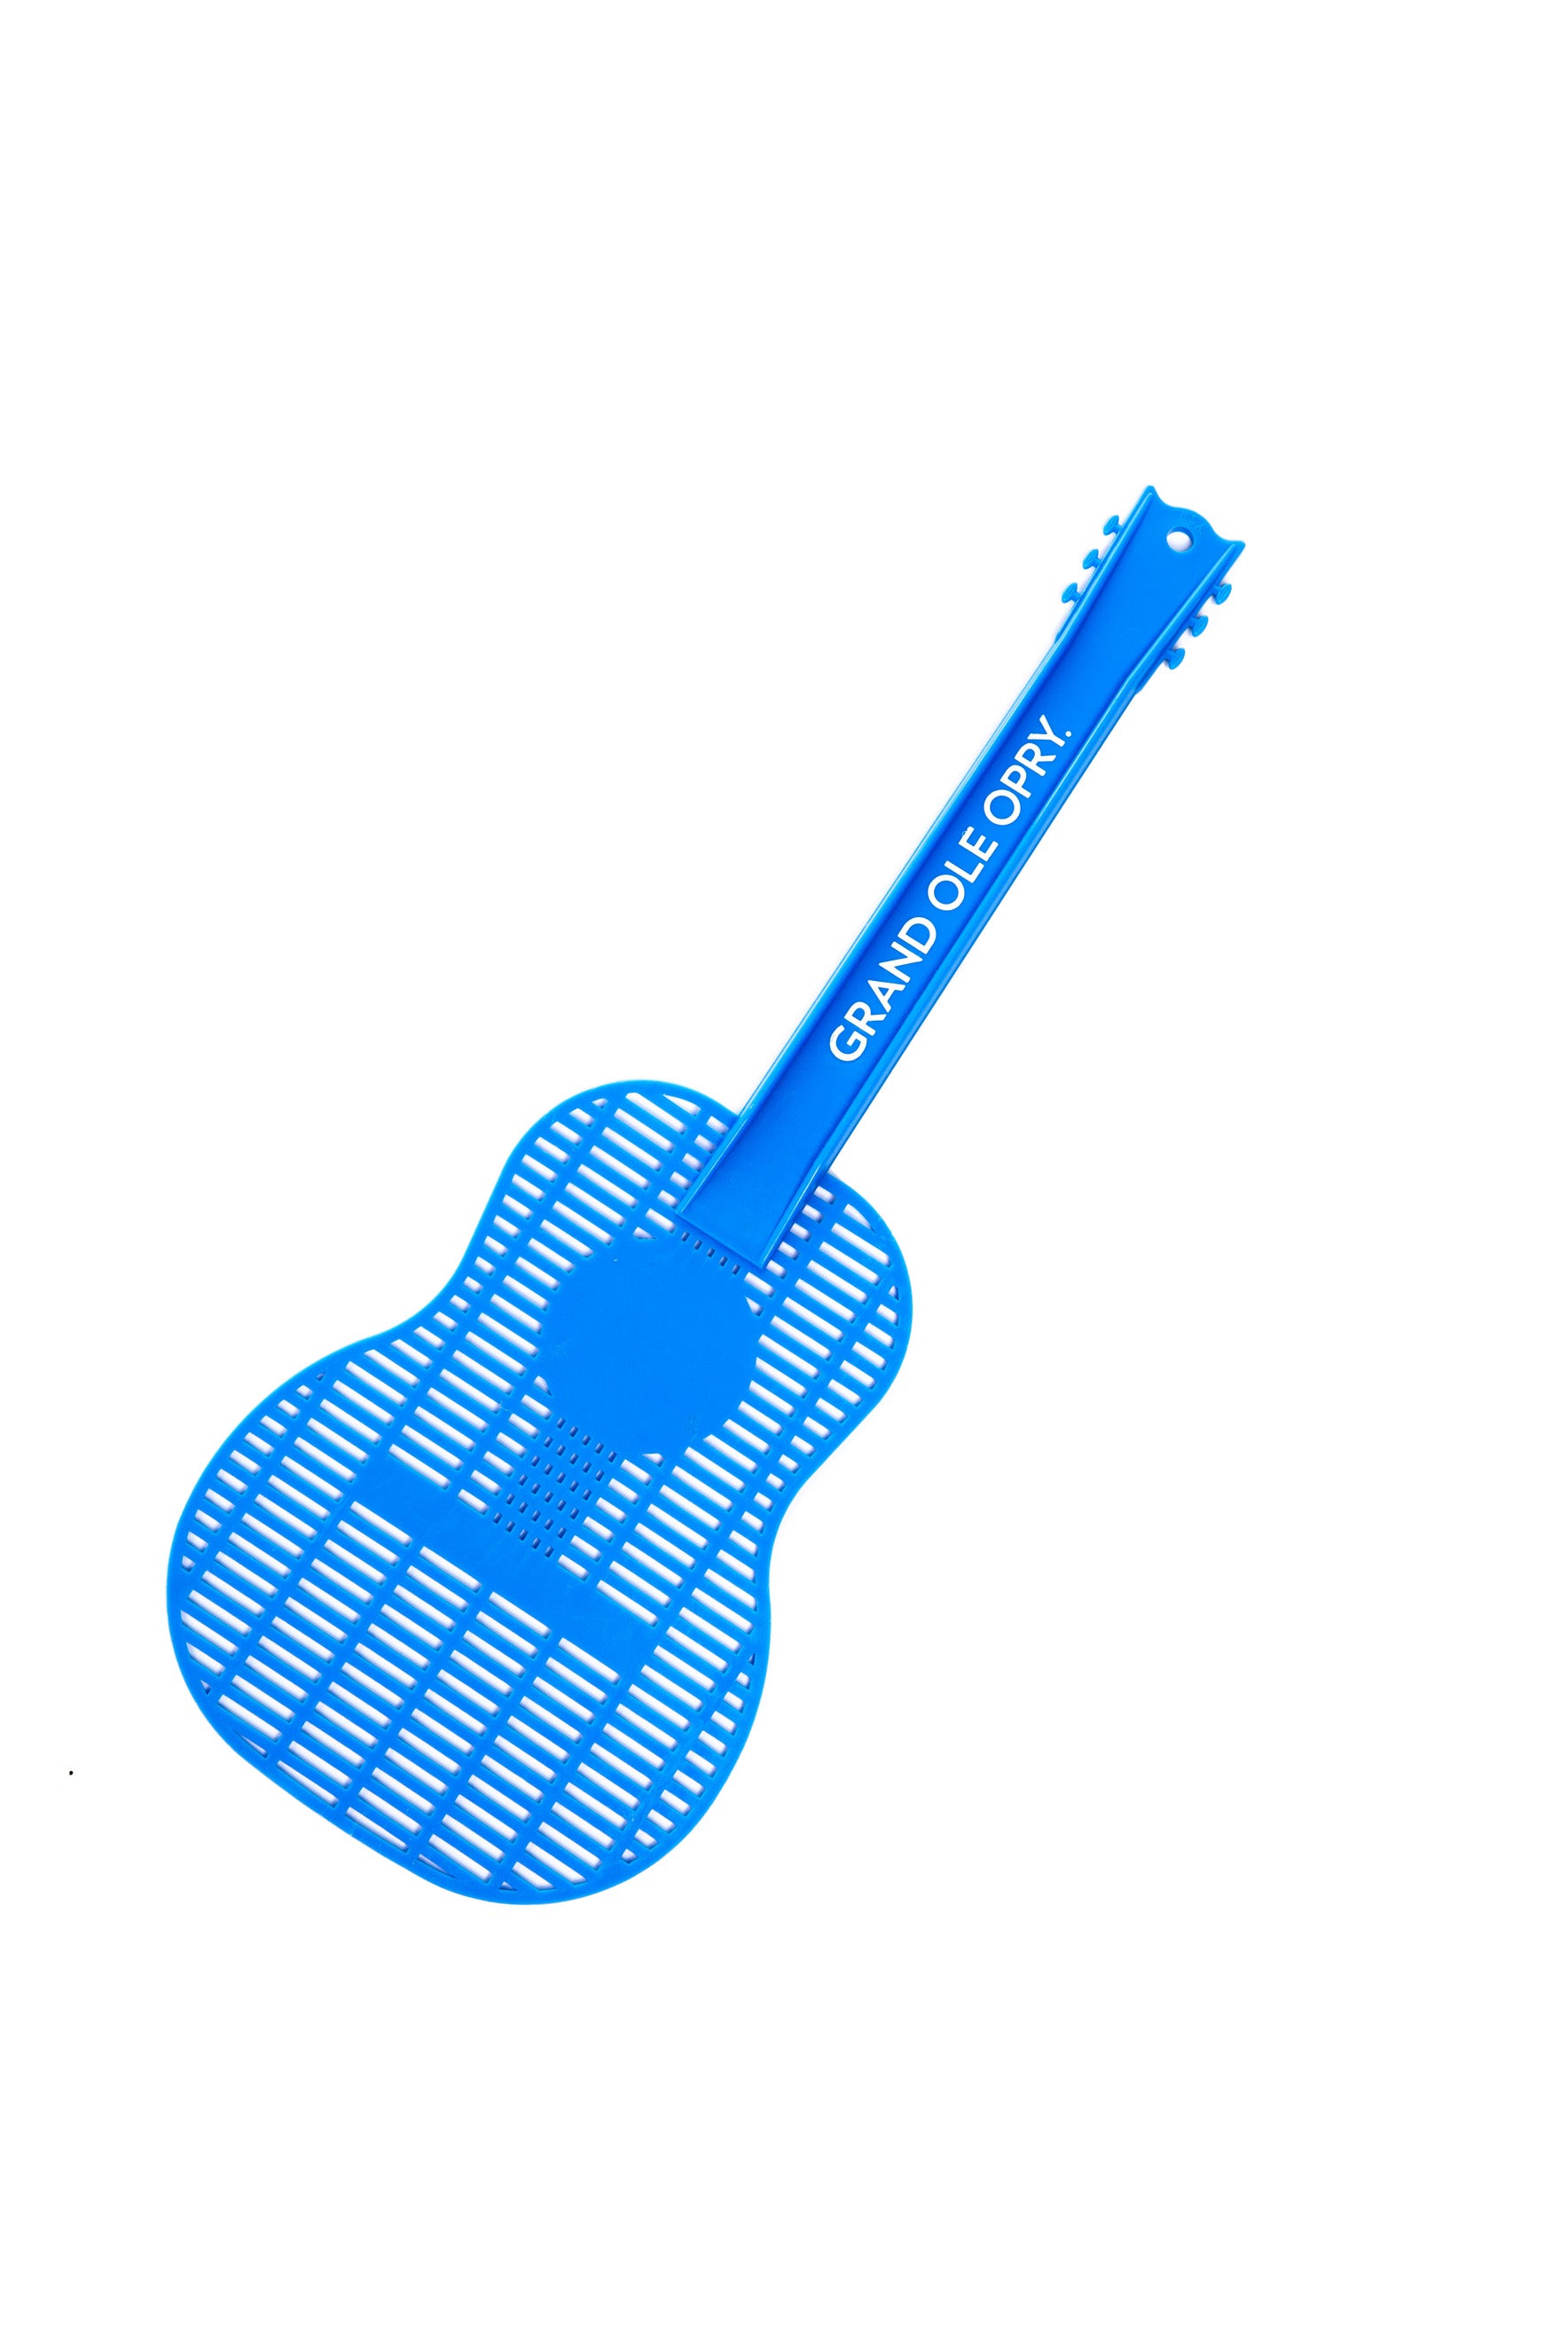 Opry Guitar Flyswatter